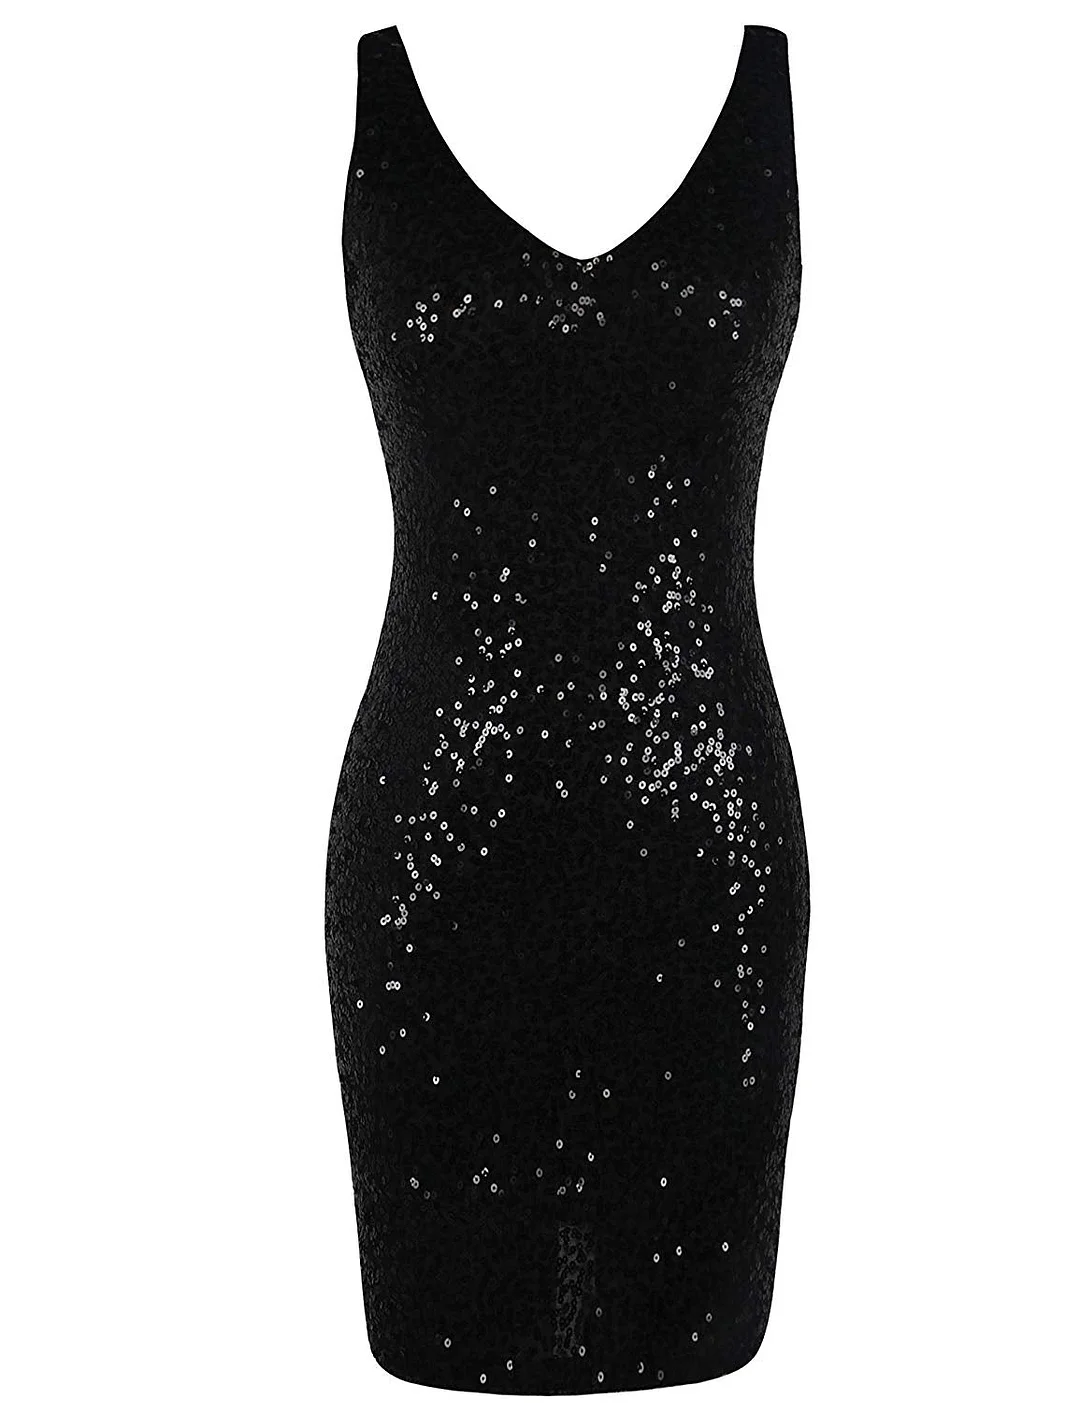 Women's Glitter dress Sequin Cocktail Dress V Neck Bodycon Glitter Party Dress